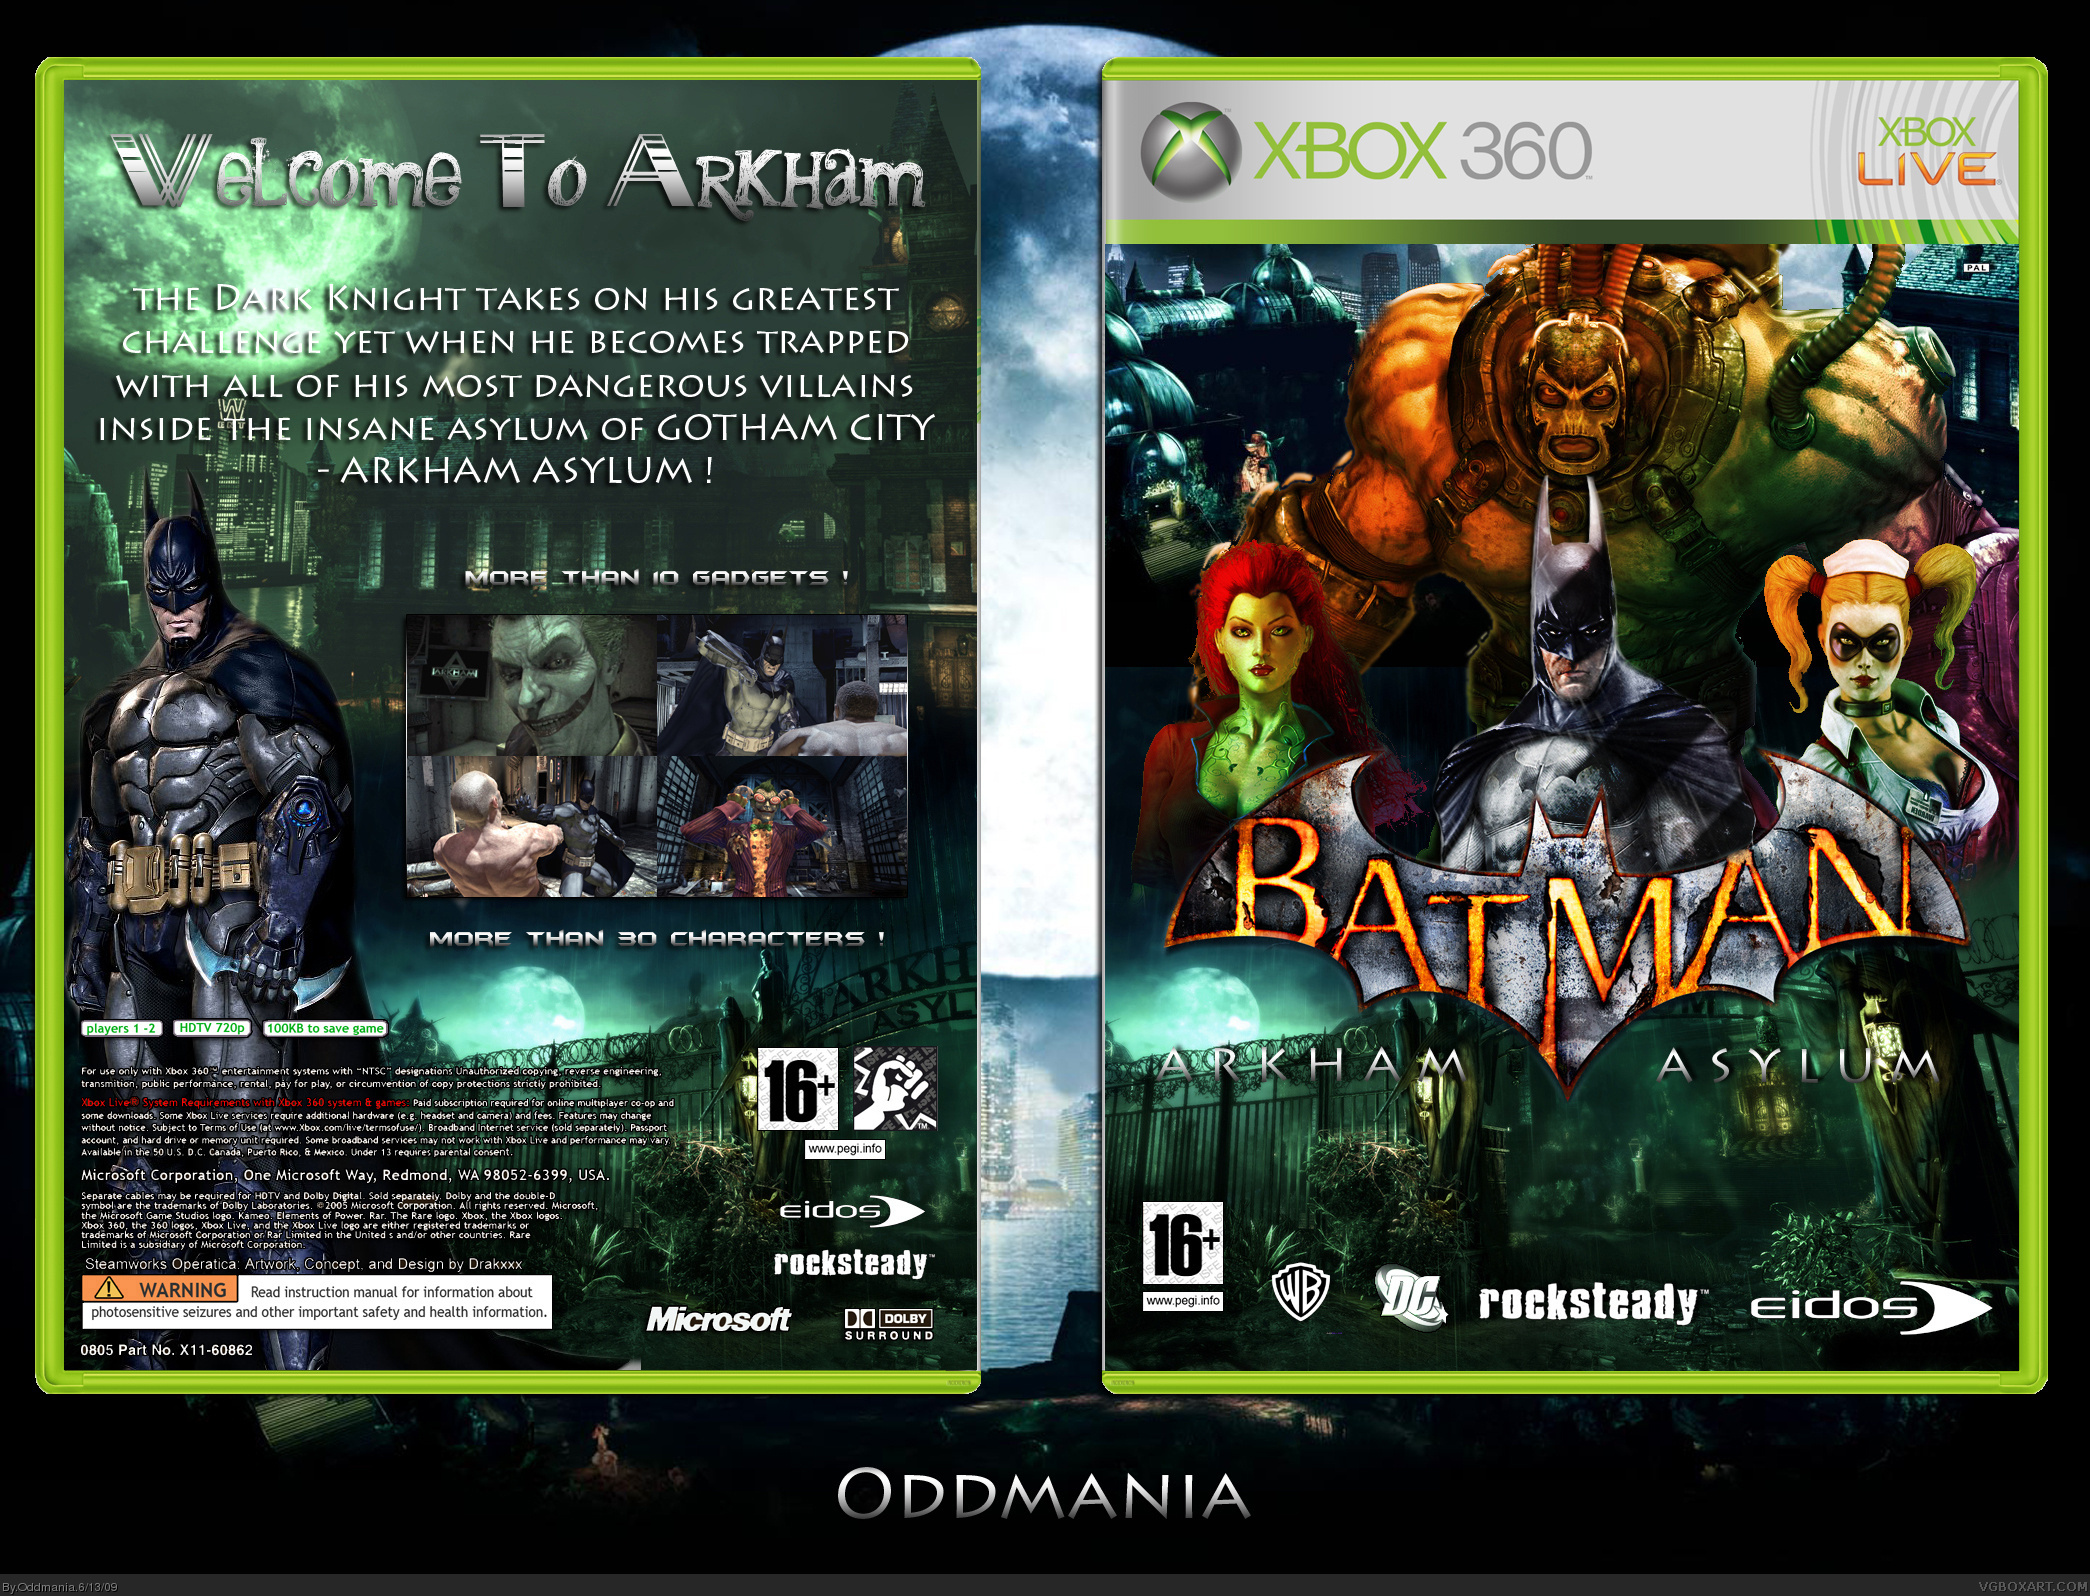 Batman: Arkham Asylum Xbox 360 Box Art Cover by Oddmania